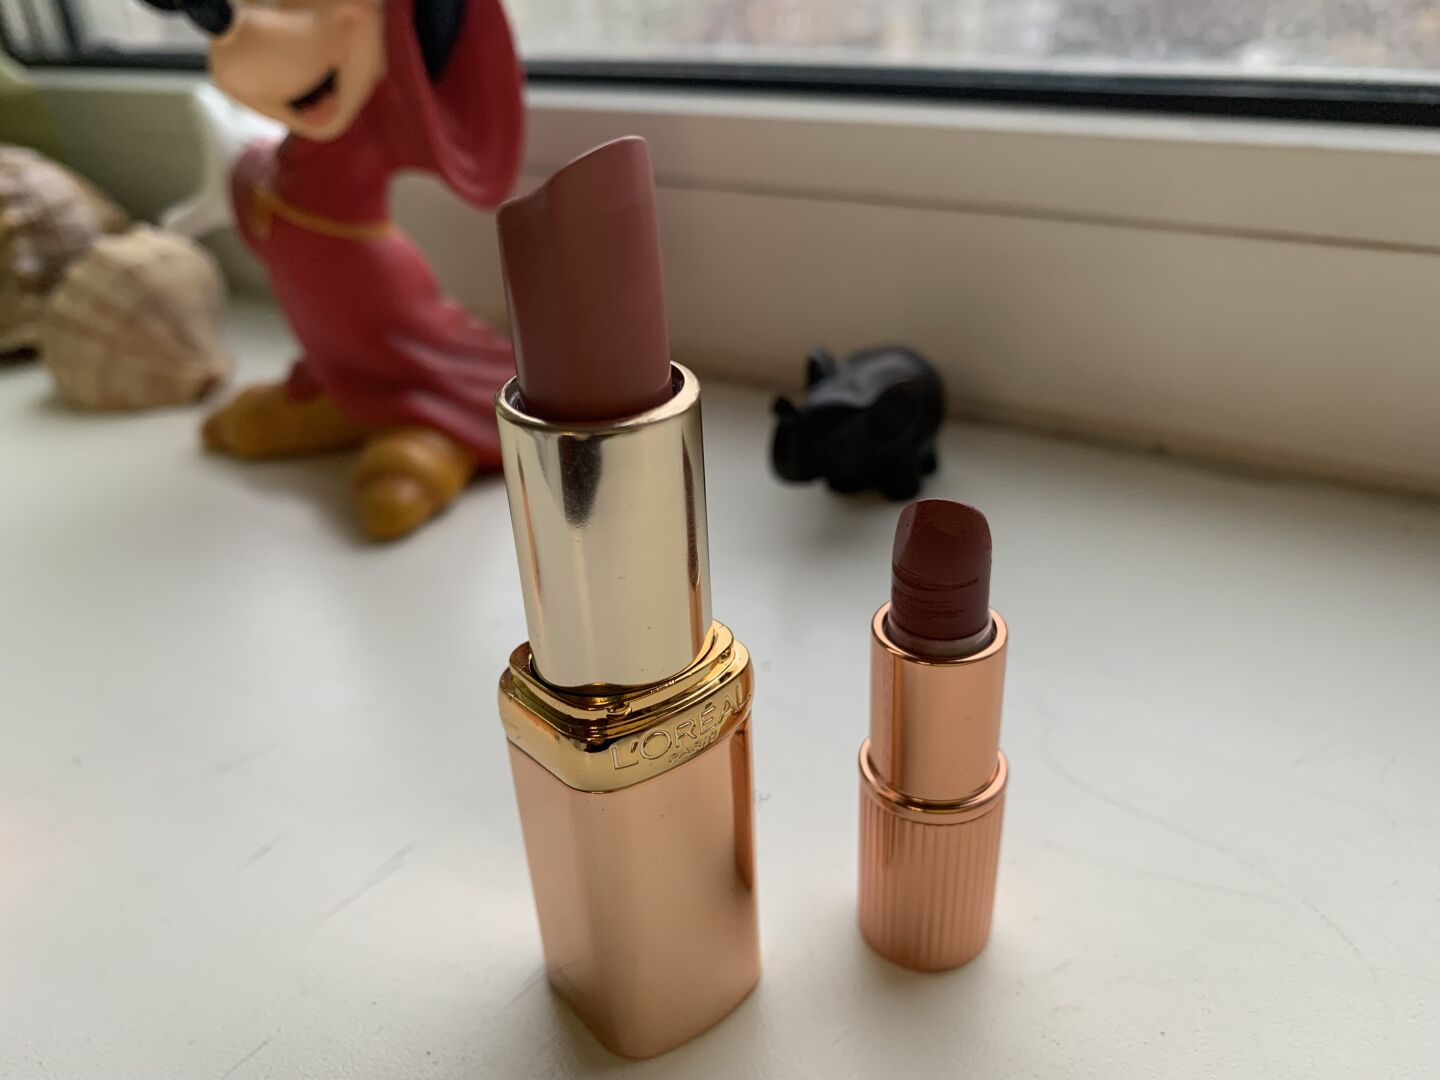 L'oreal Paris Color Riche Nude Intense 173 vs Charlotte Tilbury Matte Revolution Lipstick (Medium)